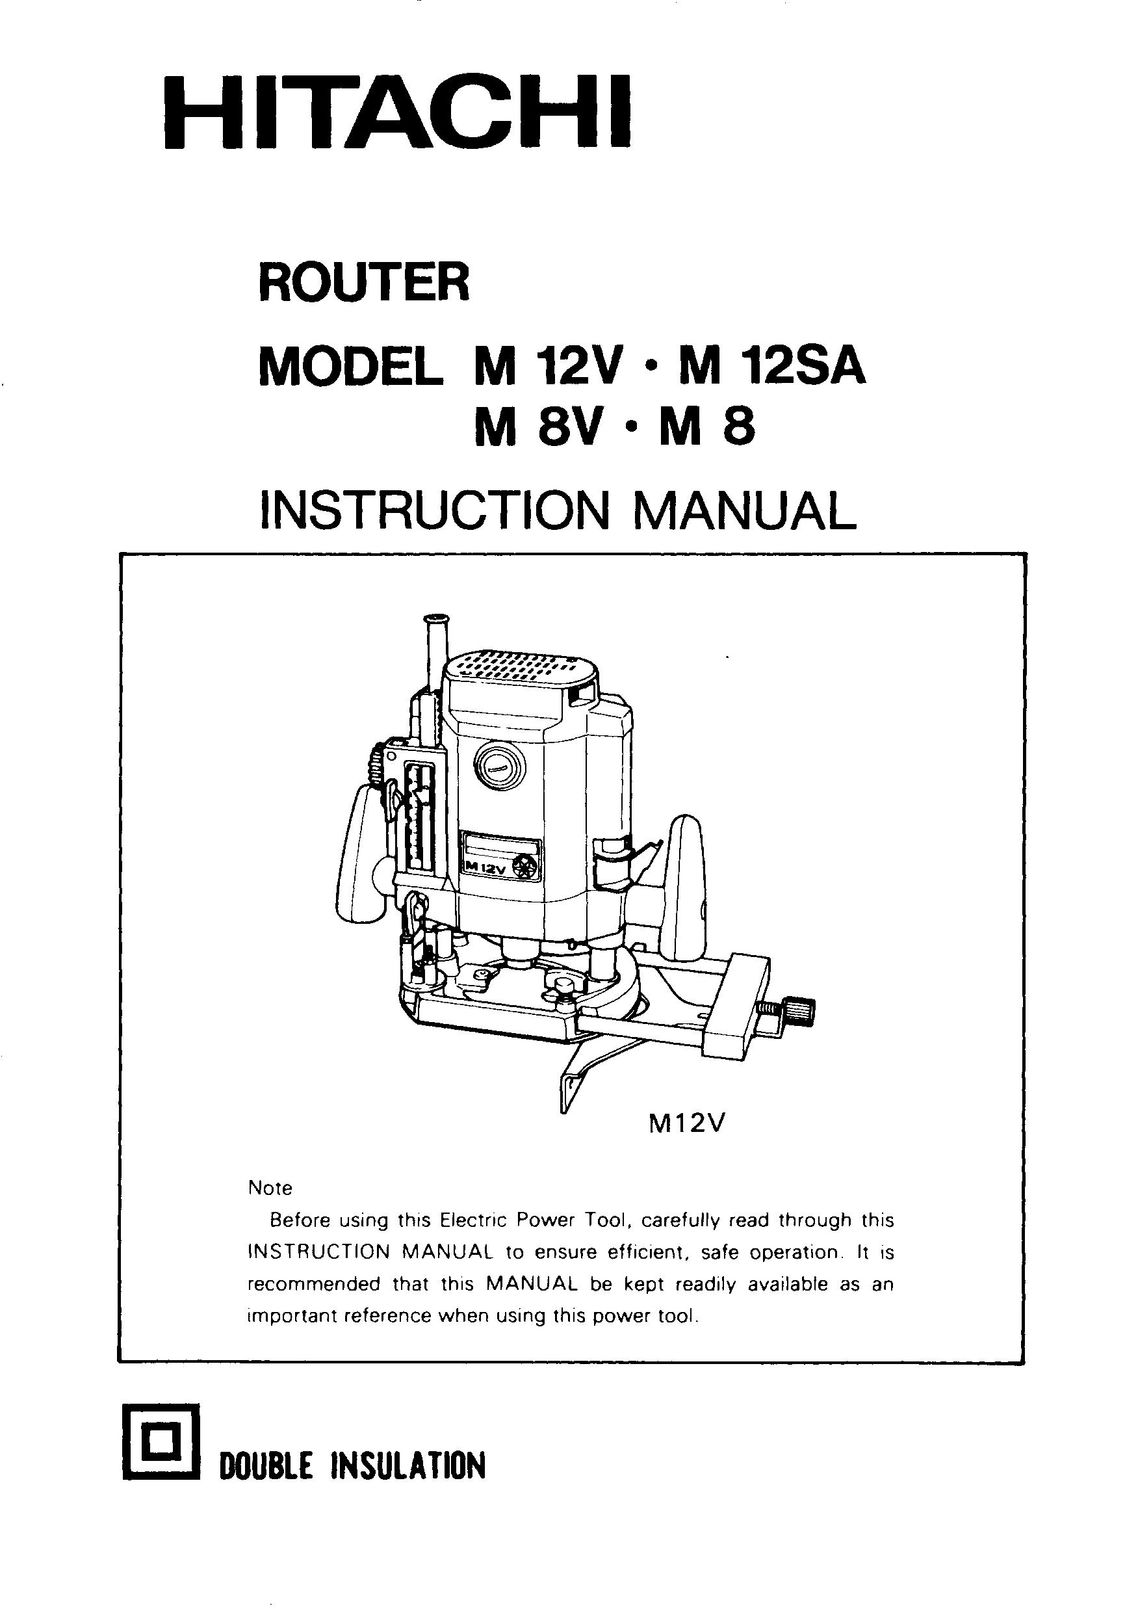 Hitachi M 8 Router User Manual